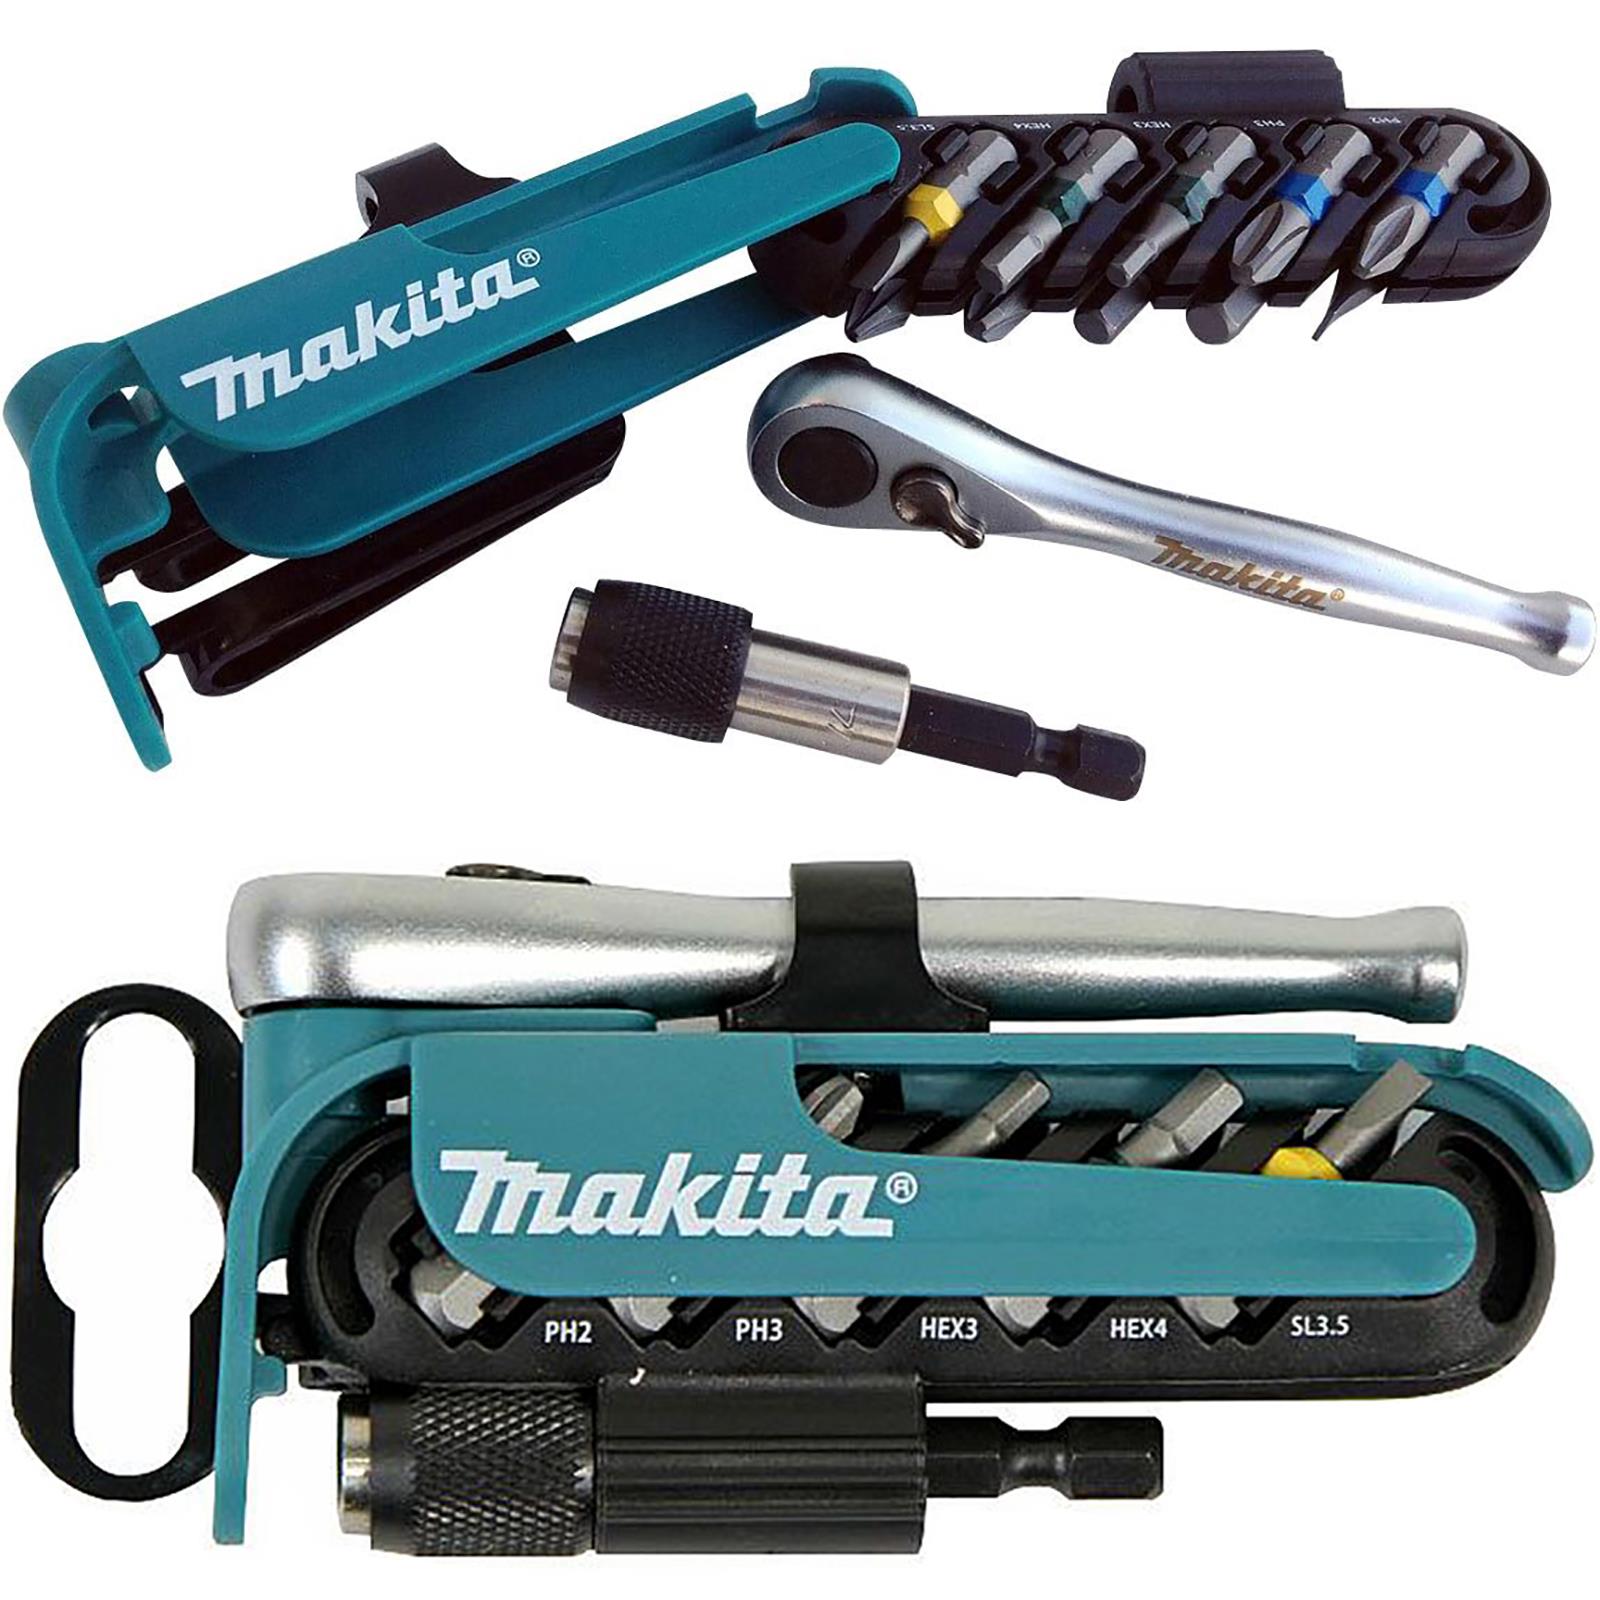 Makita Ratchet Screwdriver Bit Set 1/4" Hex Drive Reversible Handle Magnetic Bit Holder 12 Piece